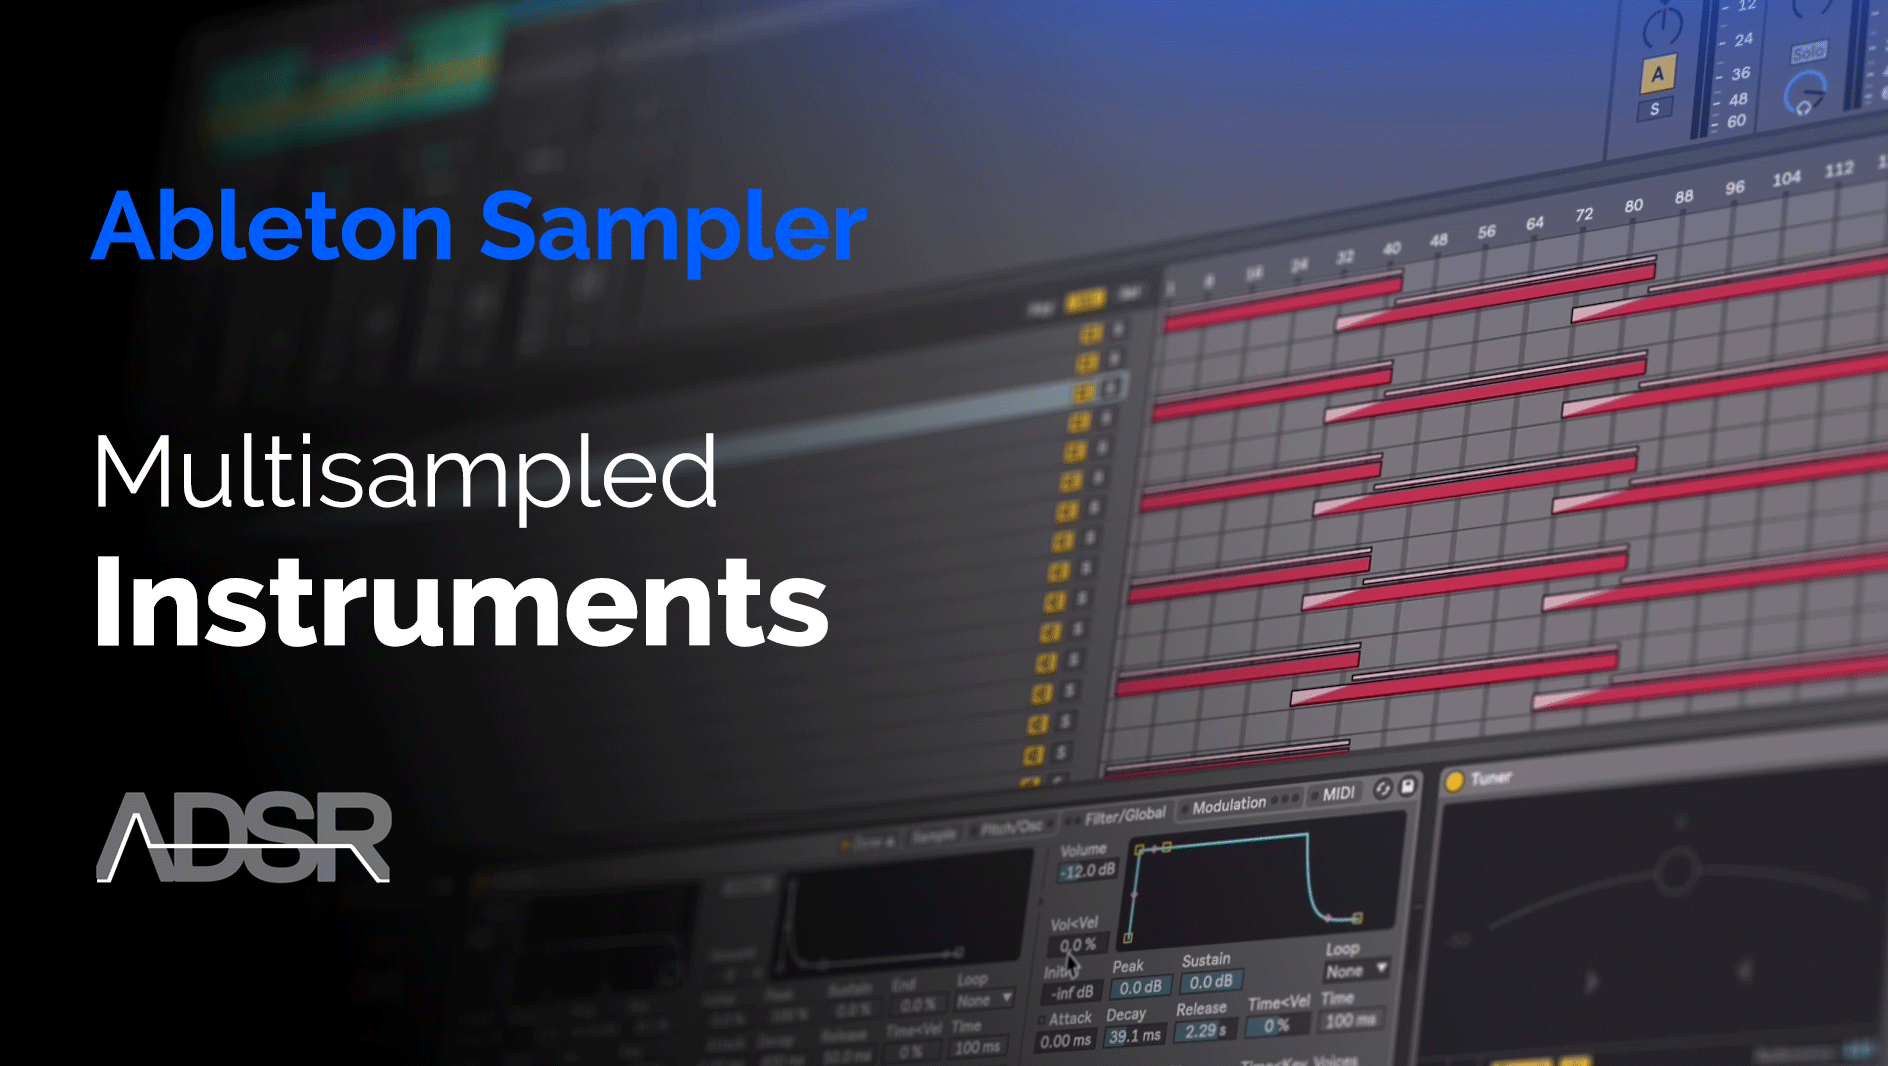 Creating a Multisampled Instrument with Ableton Sampler